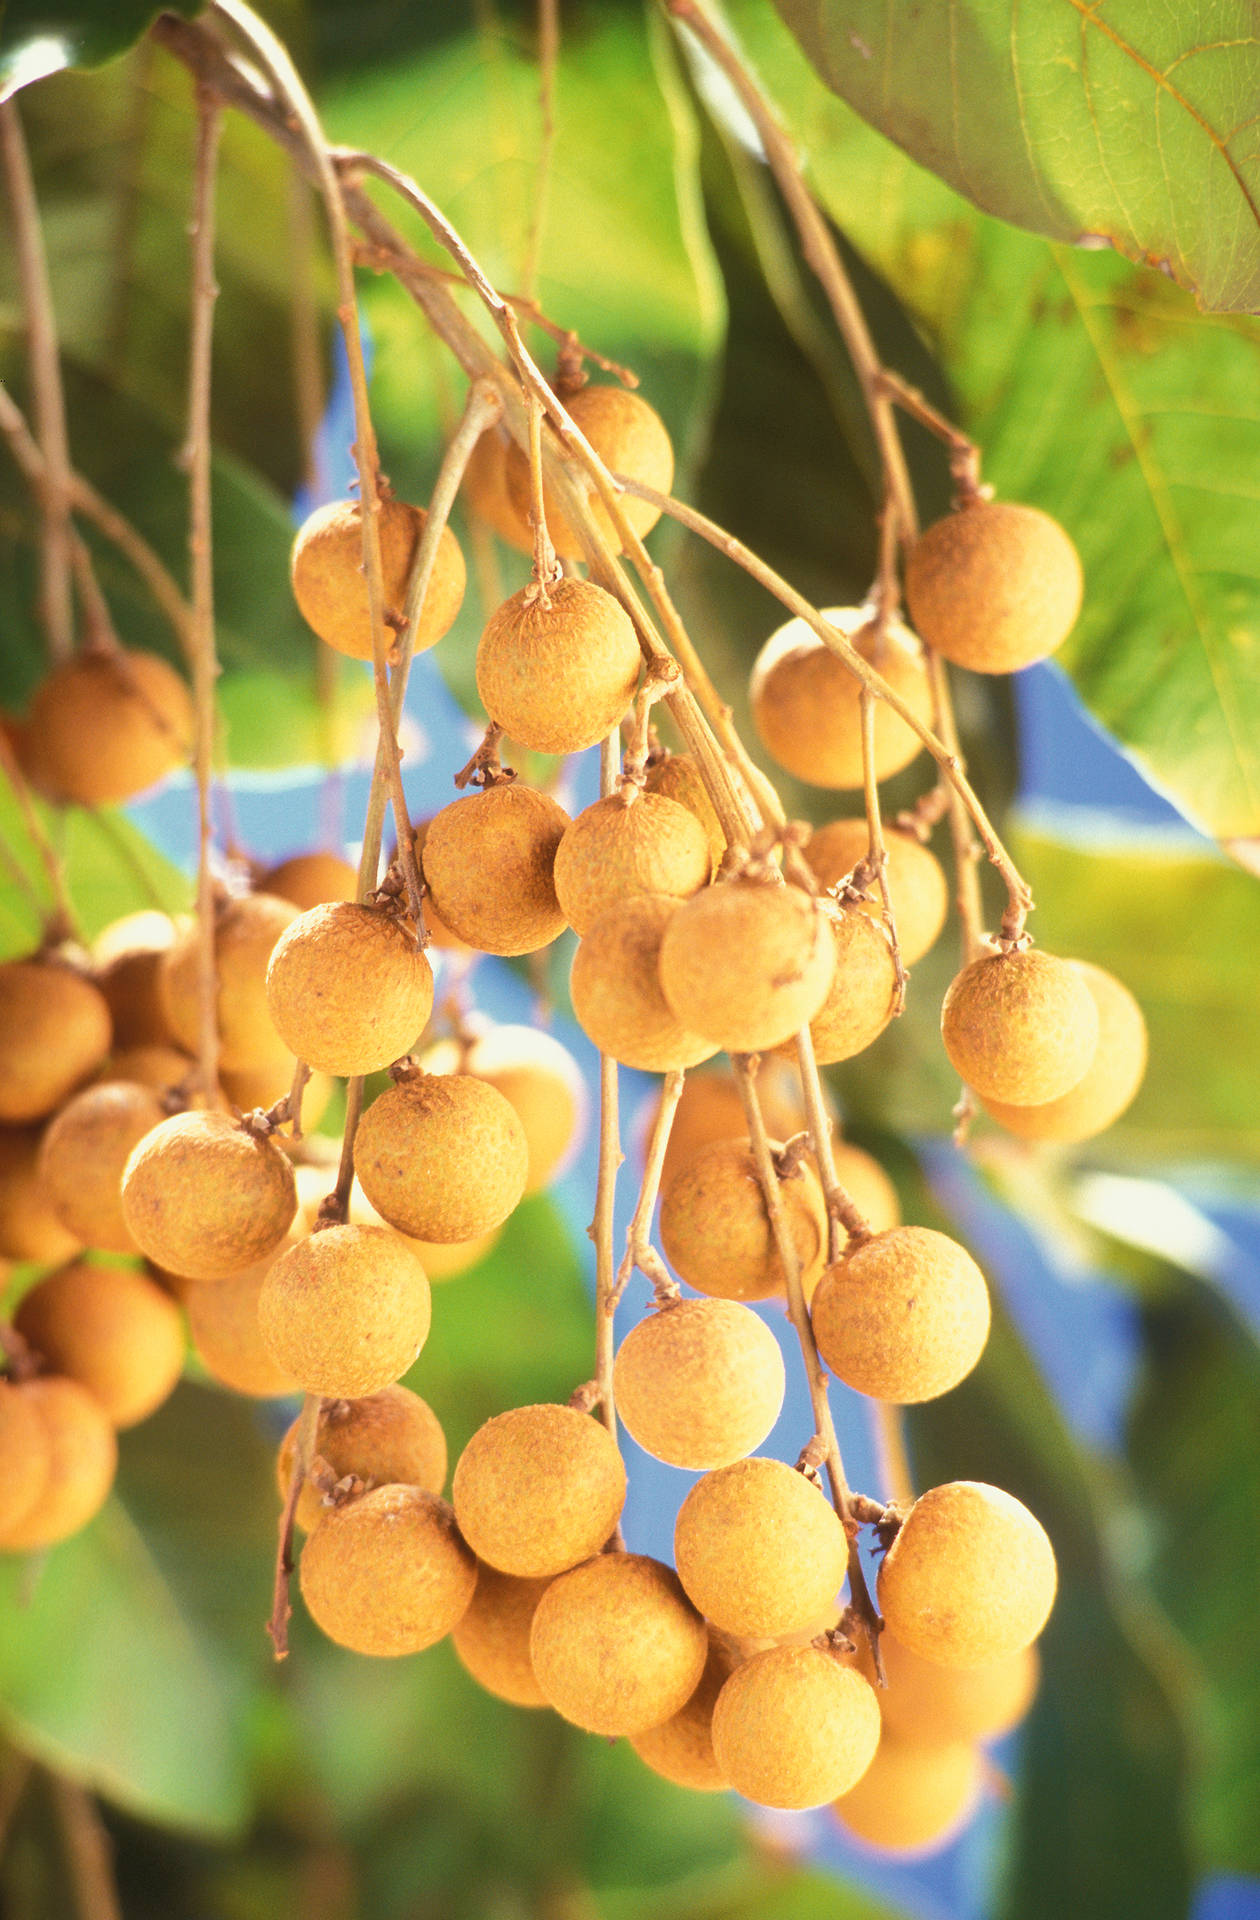 Lush Longan Fruits on a Tree Branch Wallpaper